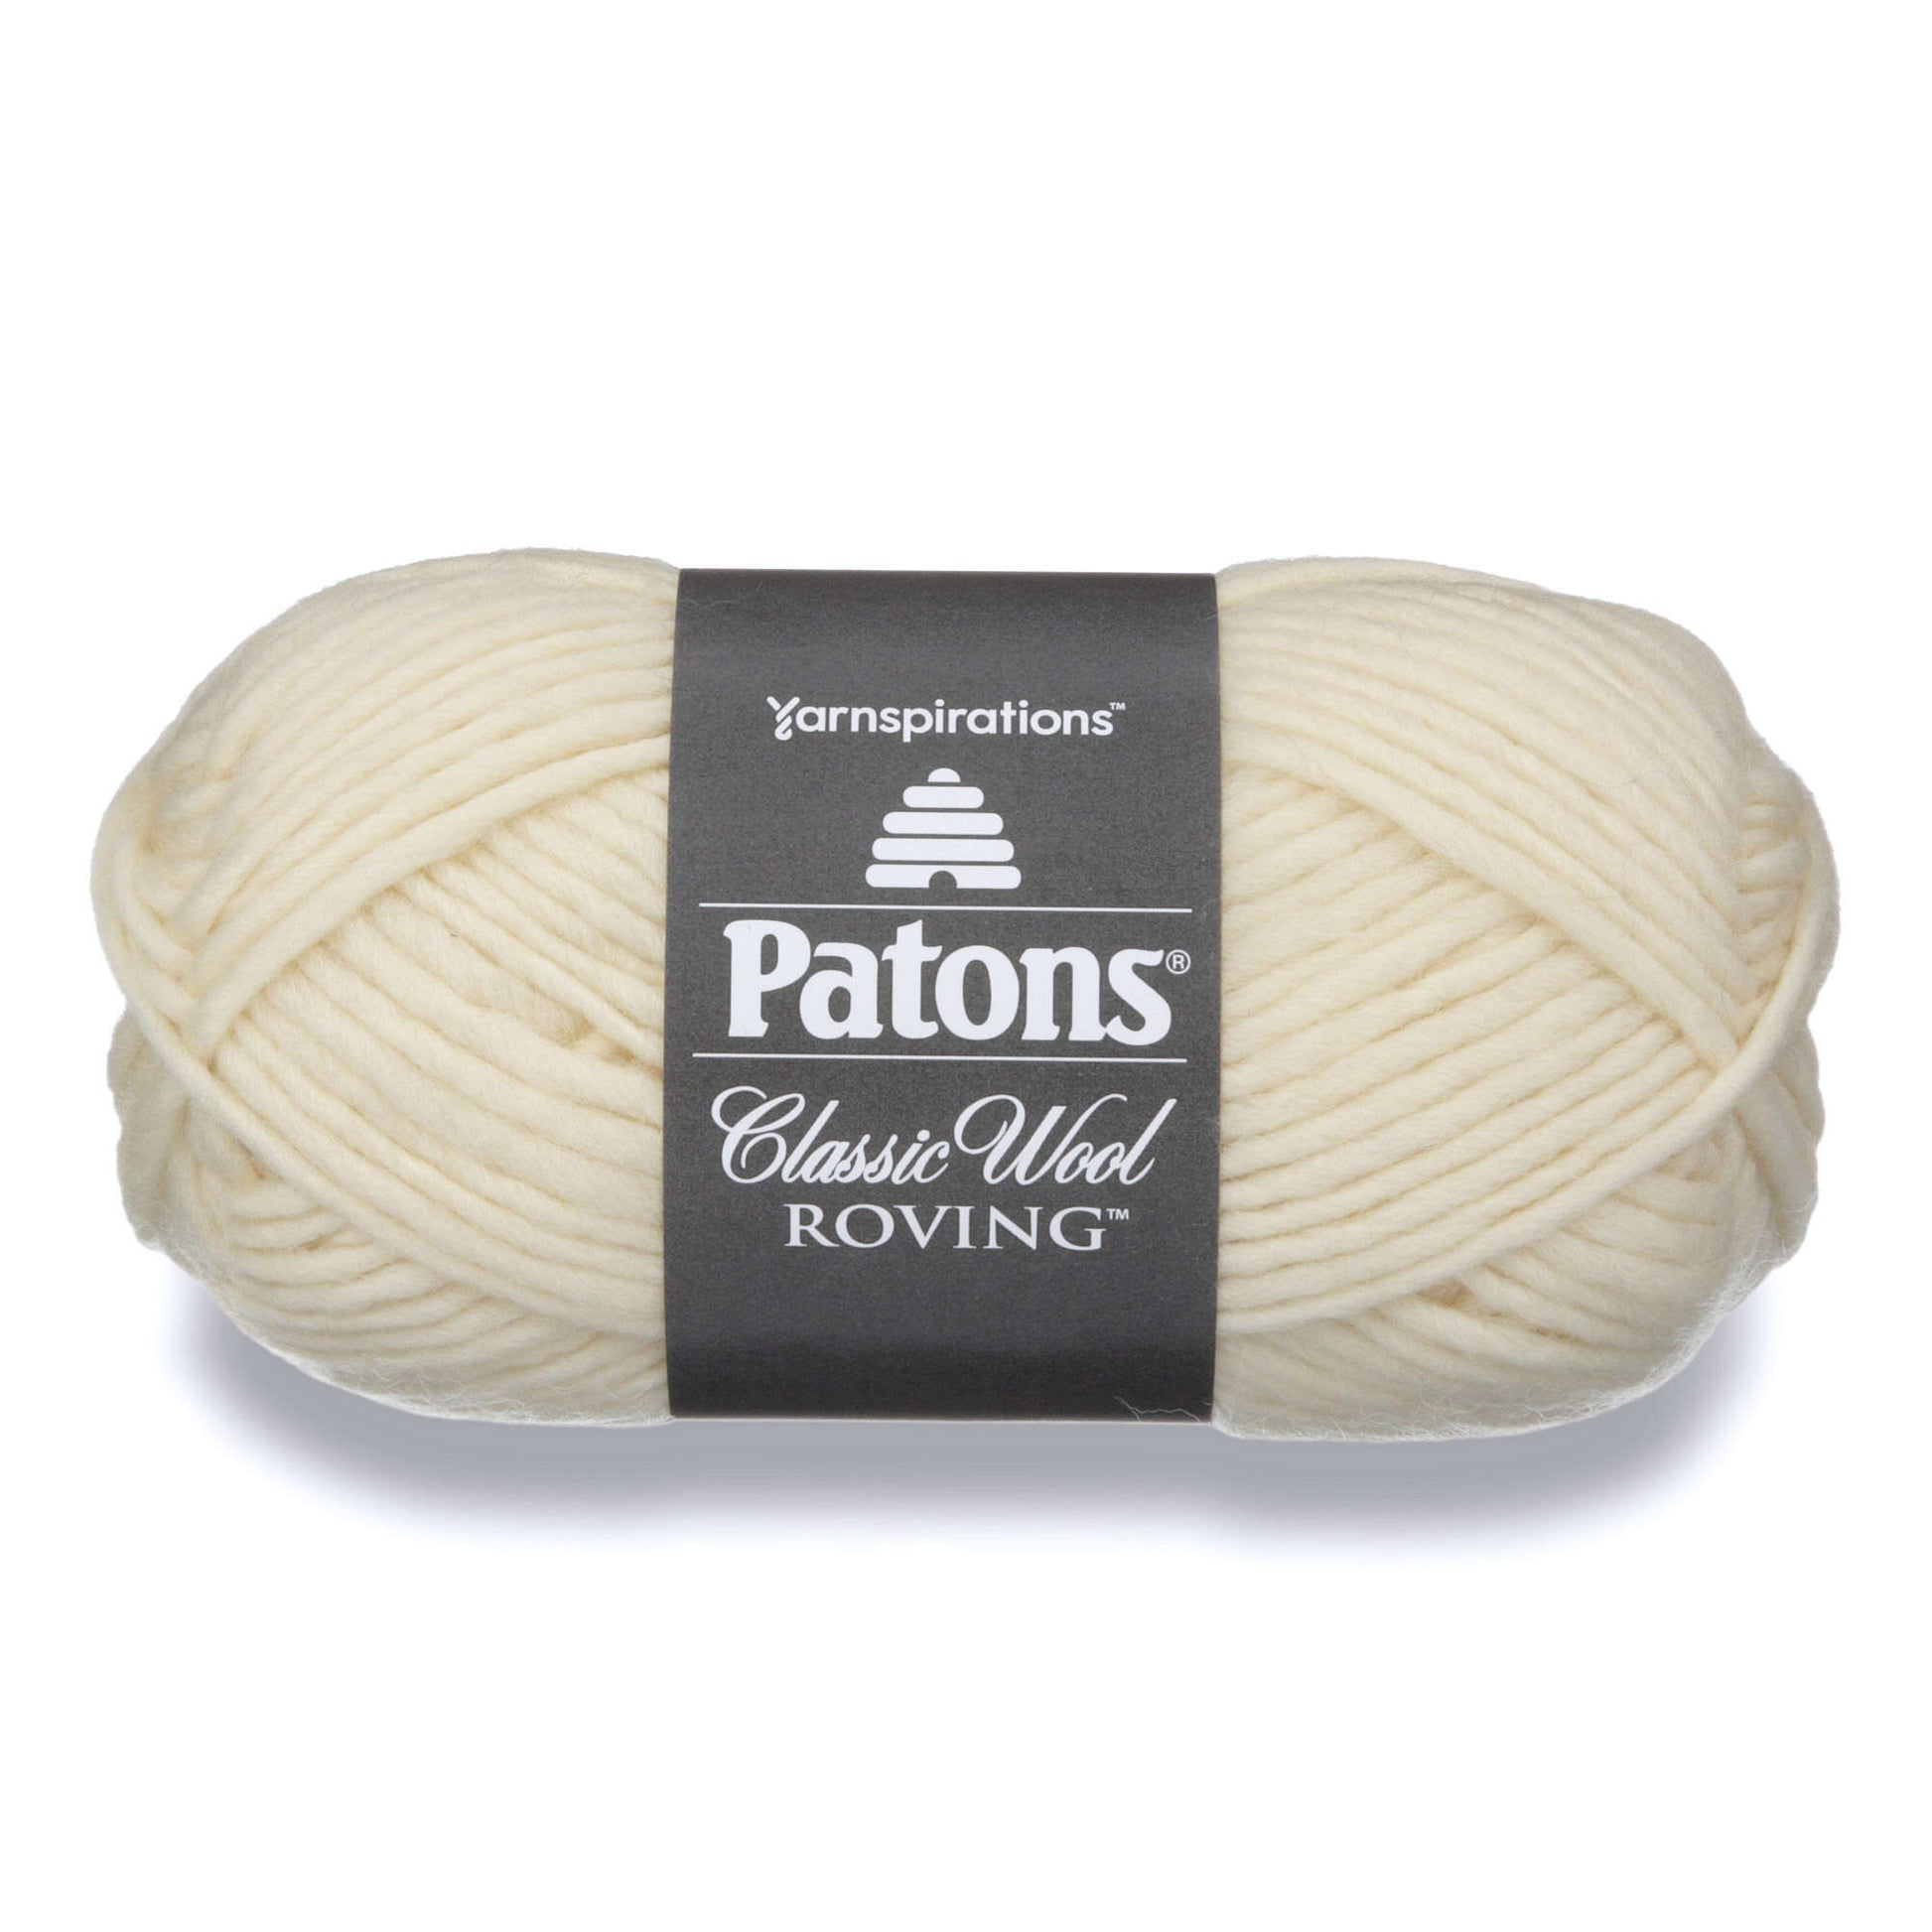 Patons Classic Wool Roving Yarn | Yarnspirations